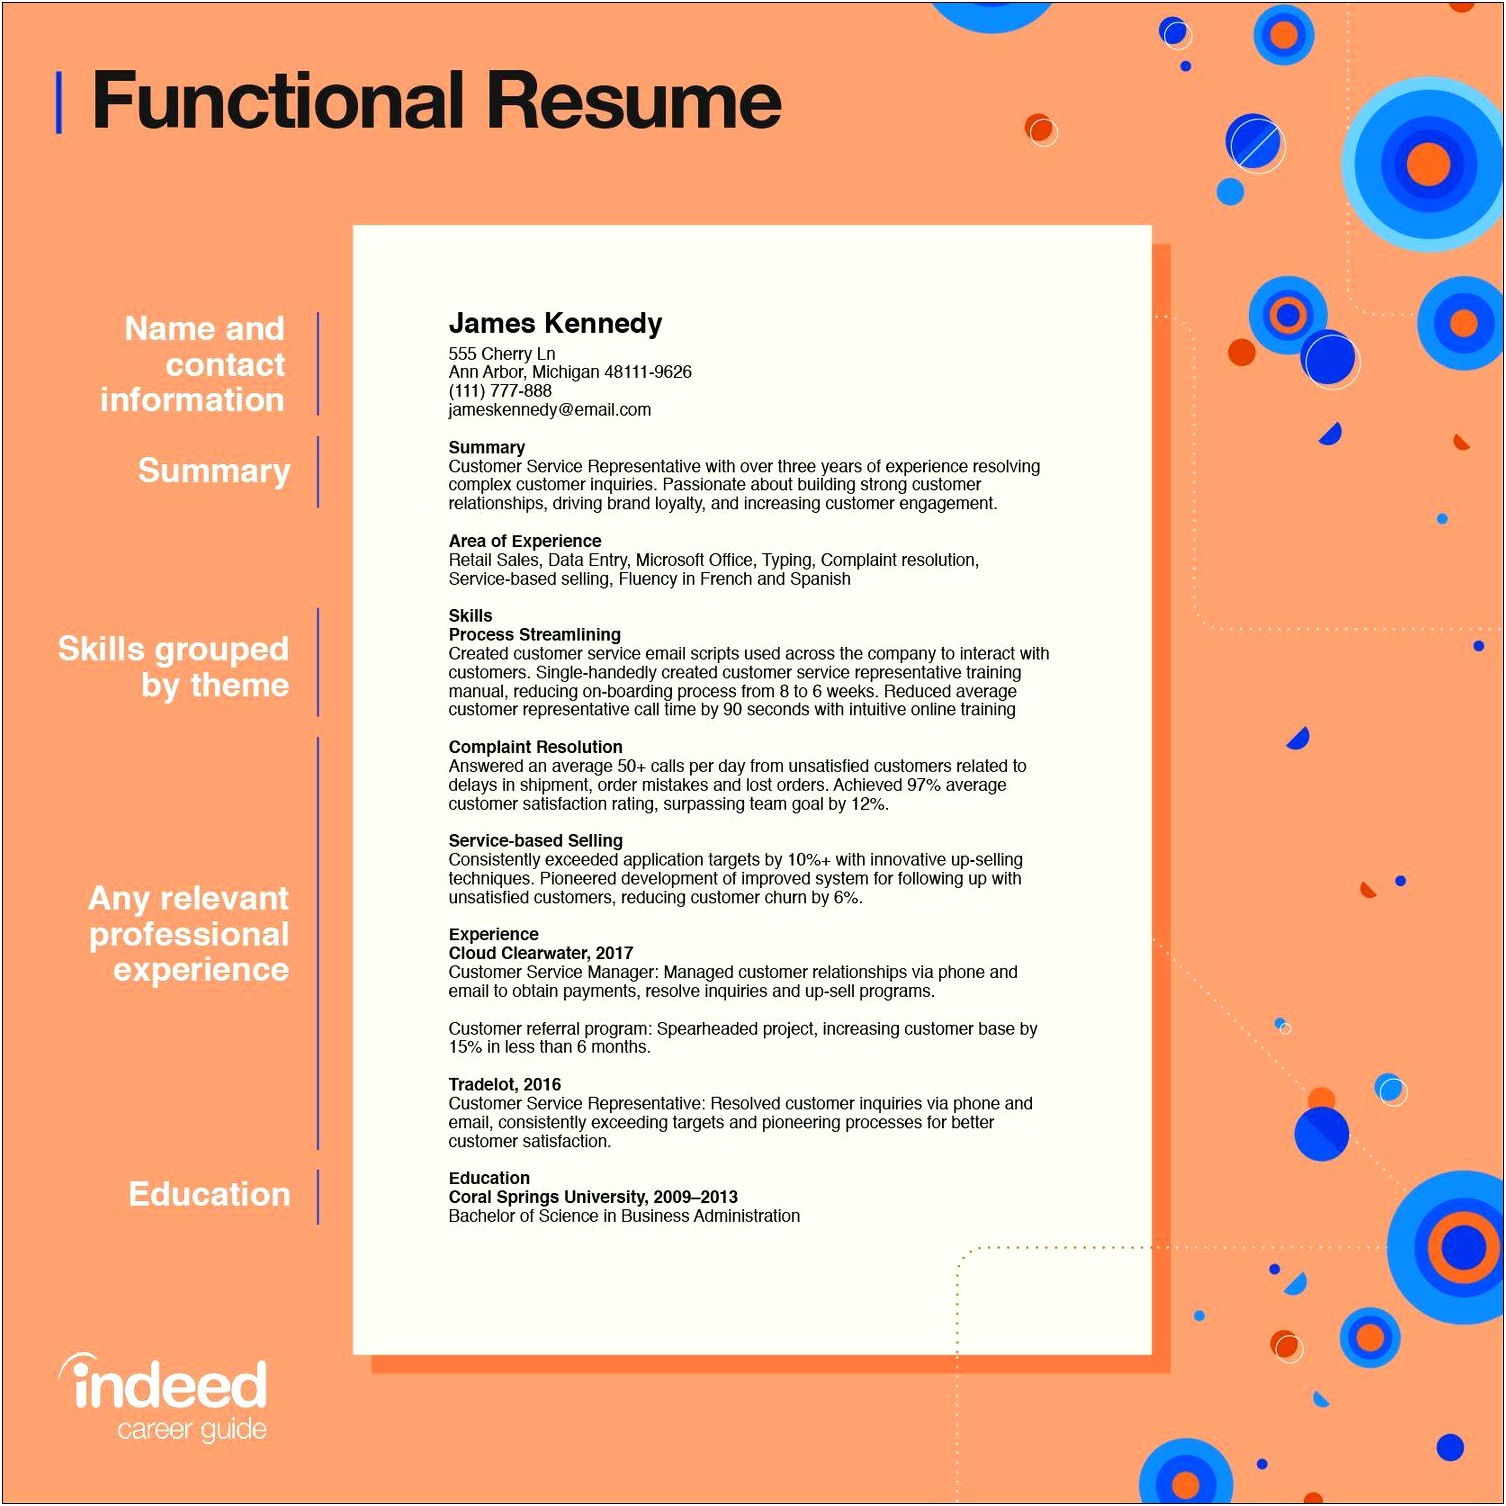 Resume Not Put Relevant Jobs